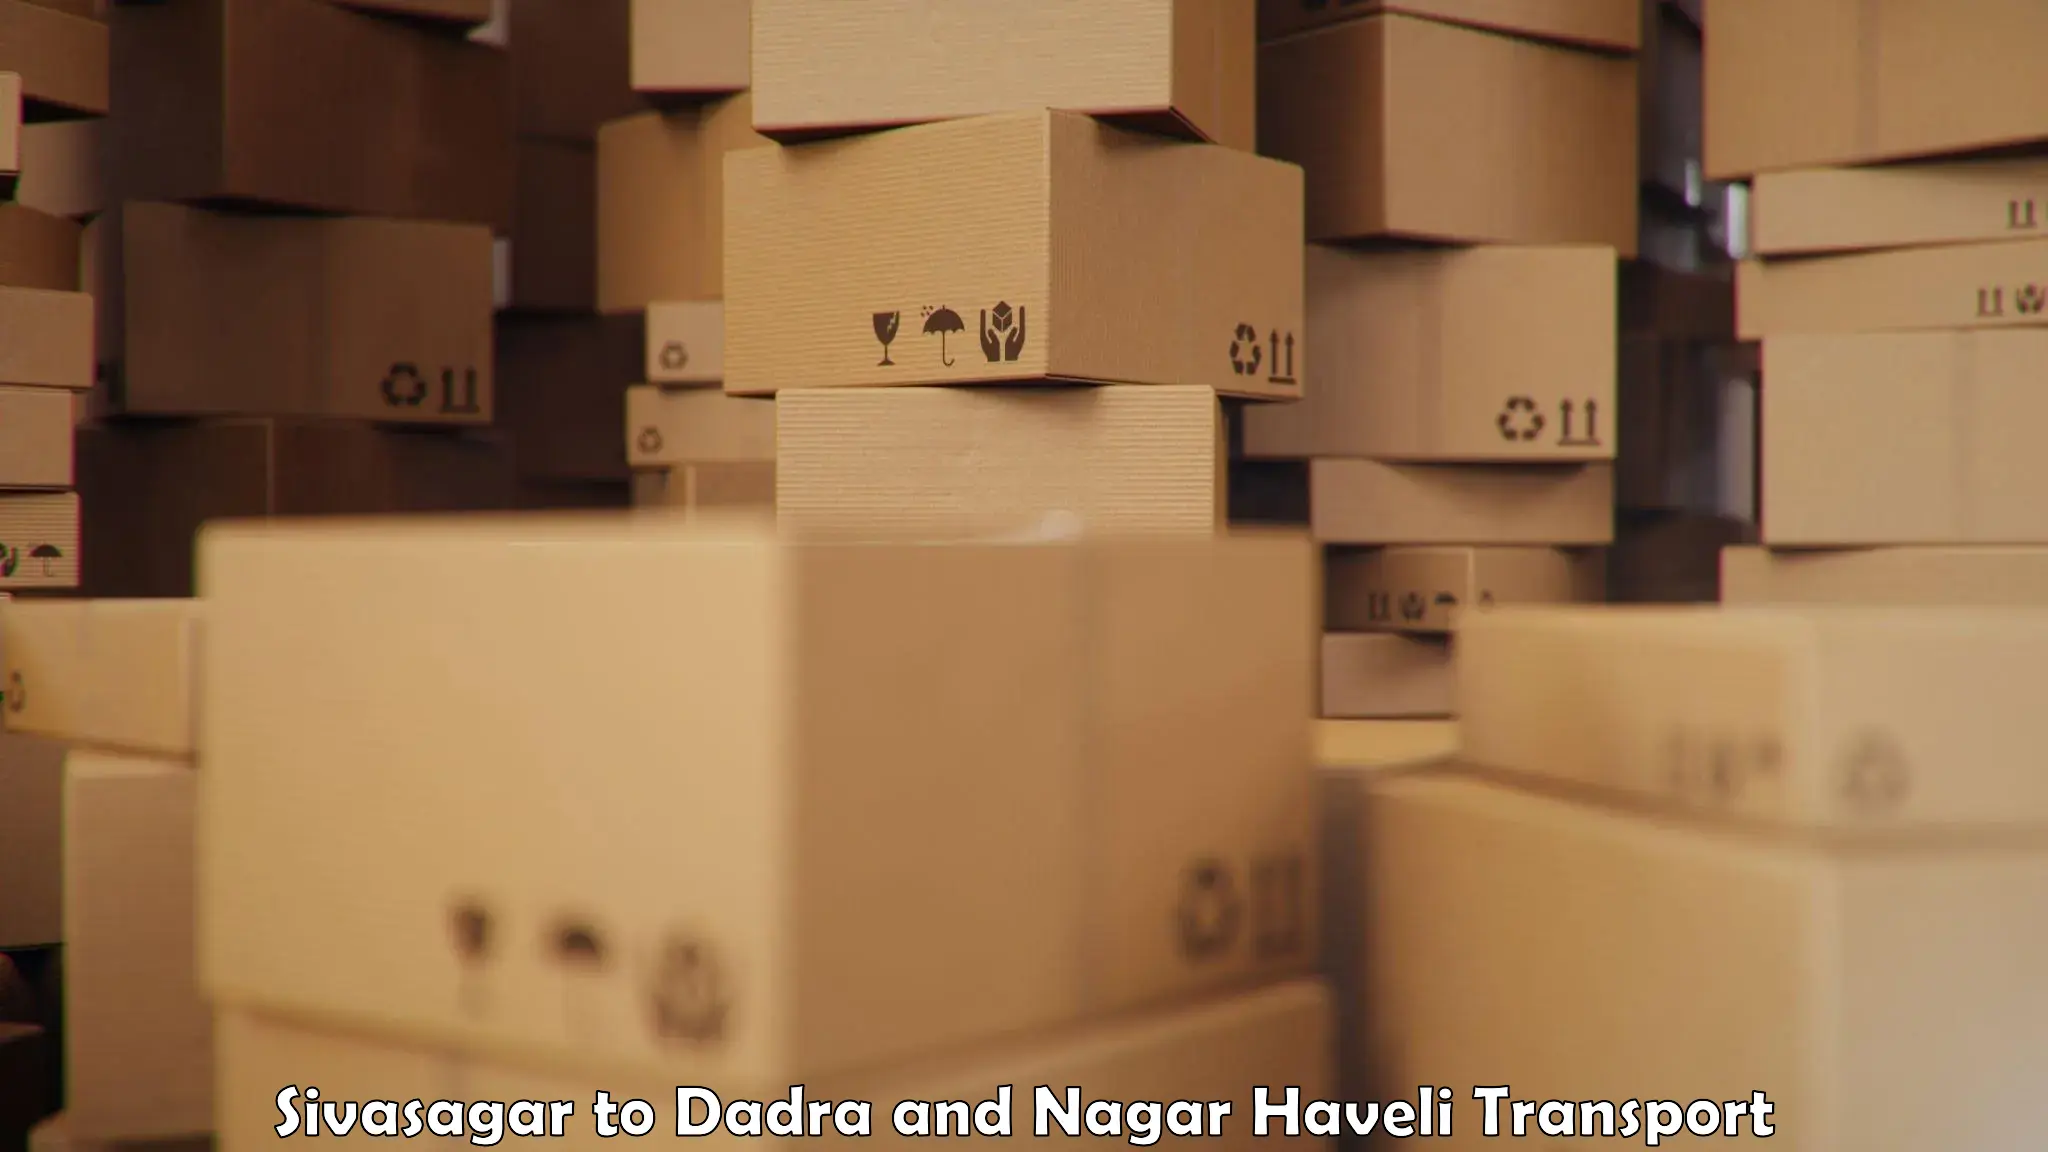 Air freight transport services Sivasagar to Dadra and Nagar Haveli